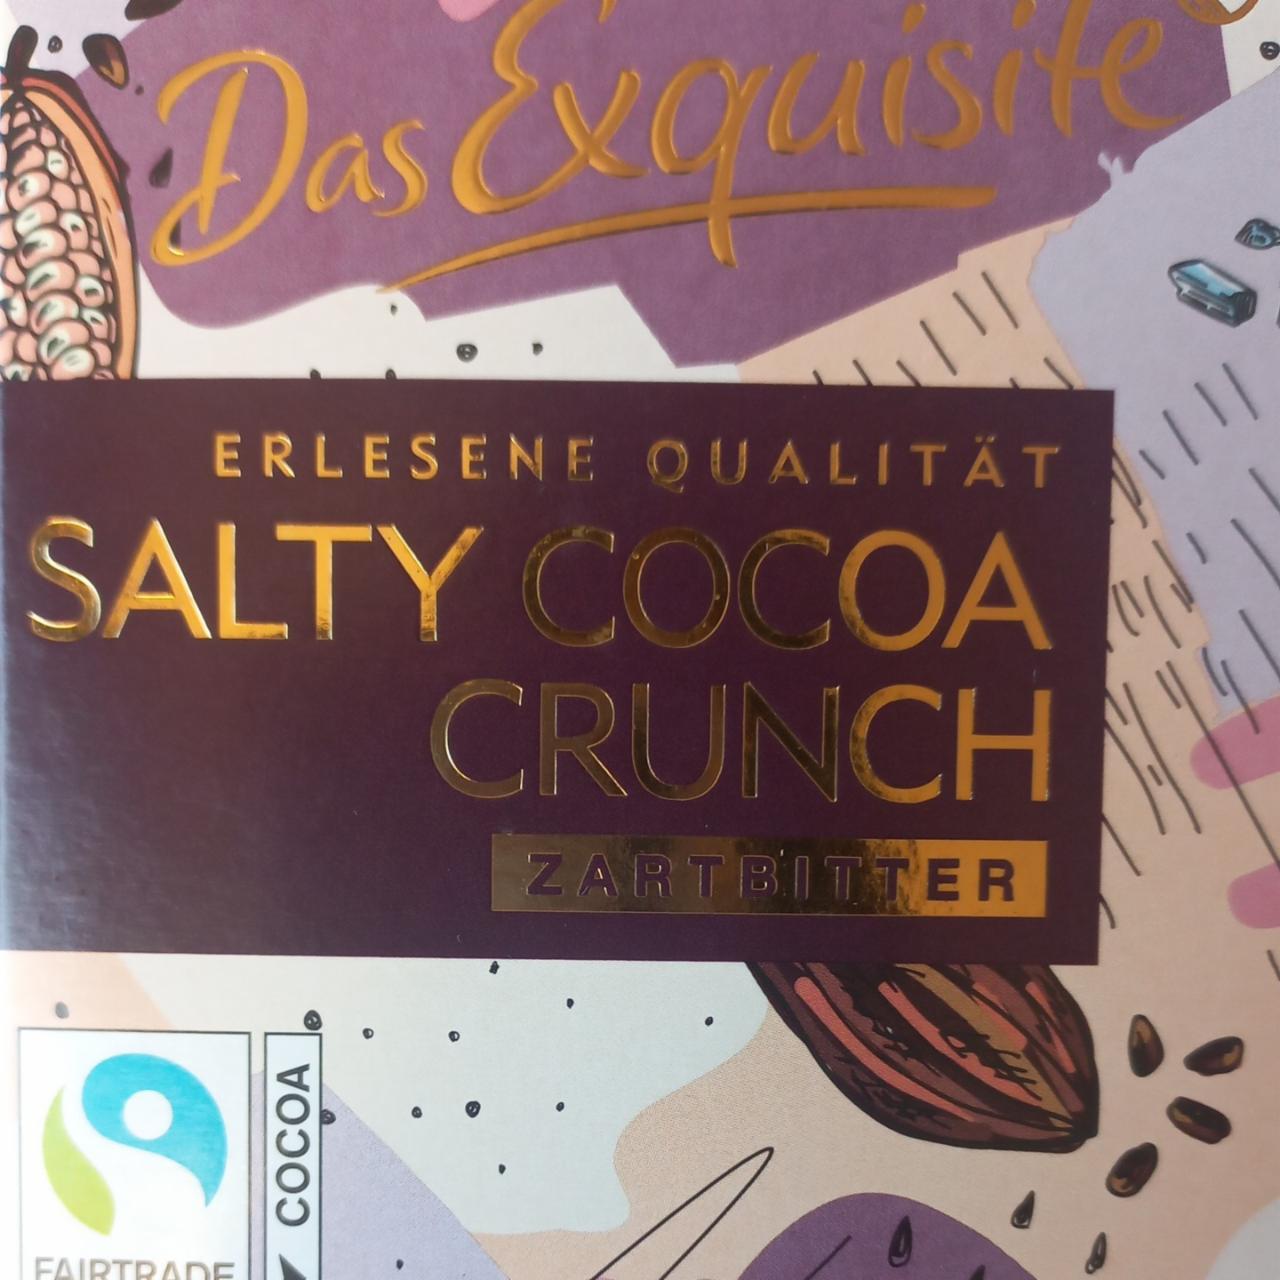 Zdjęcia - Salty Cocoa Crunch Zartbitter Das Exquisite